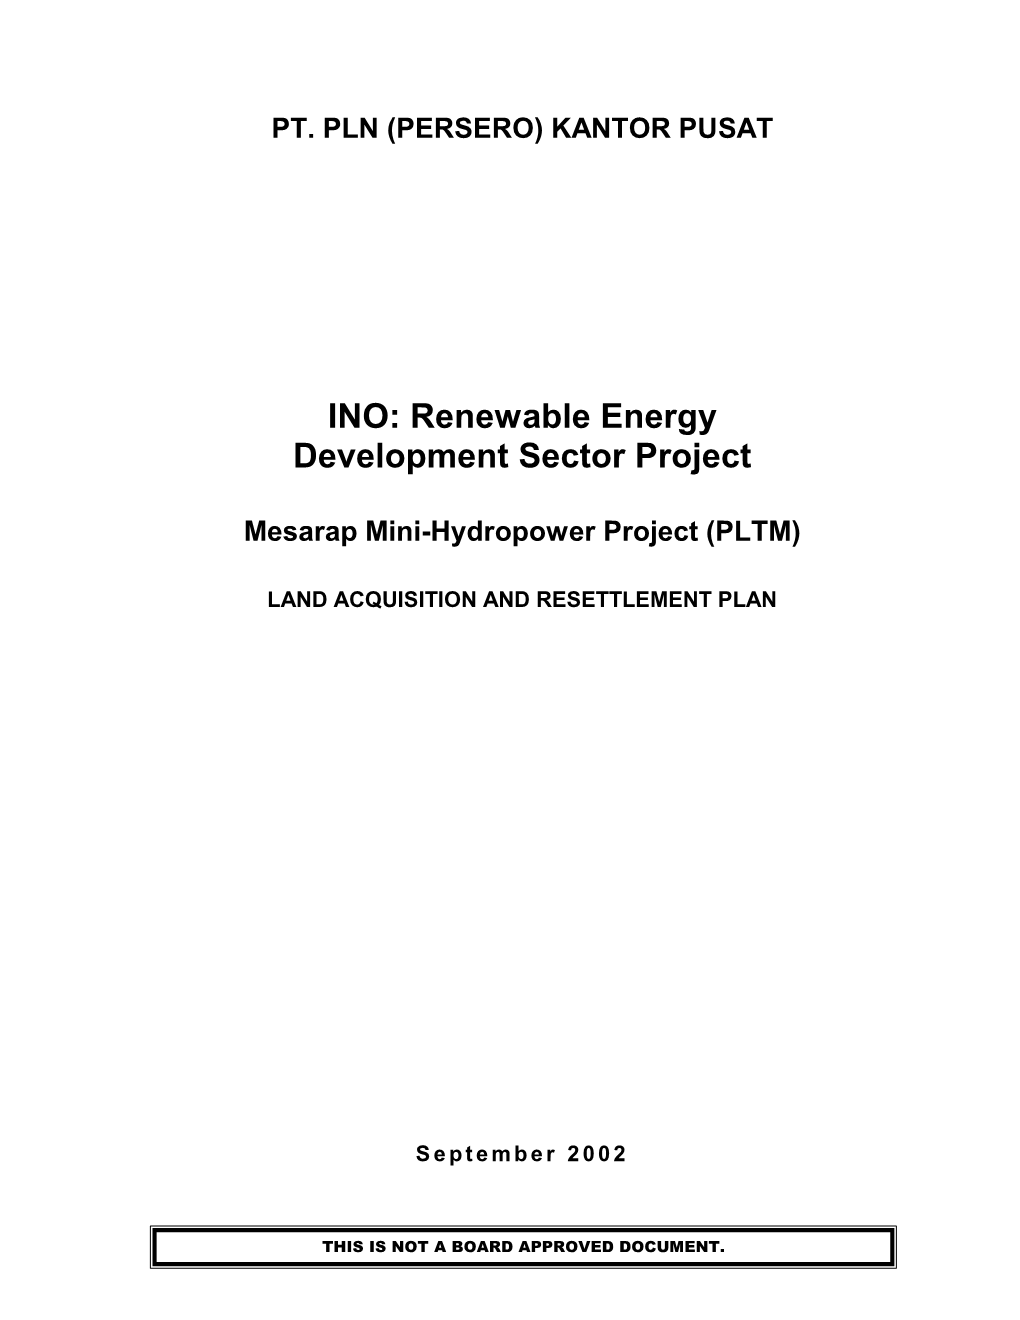 Renewable Energy Development Sector Project